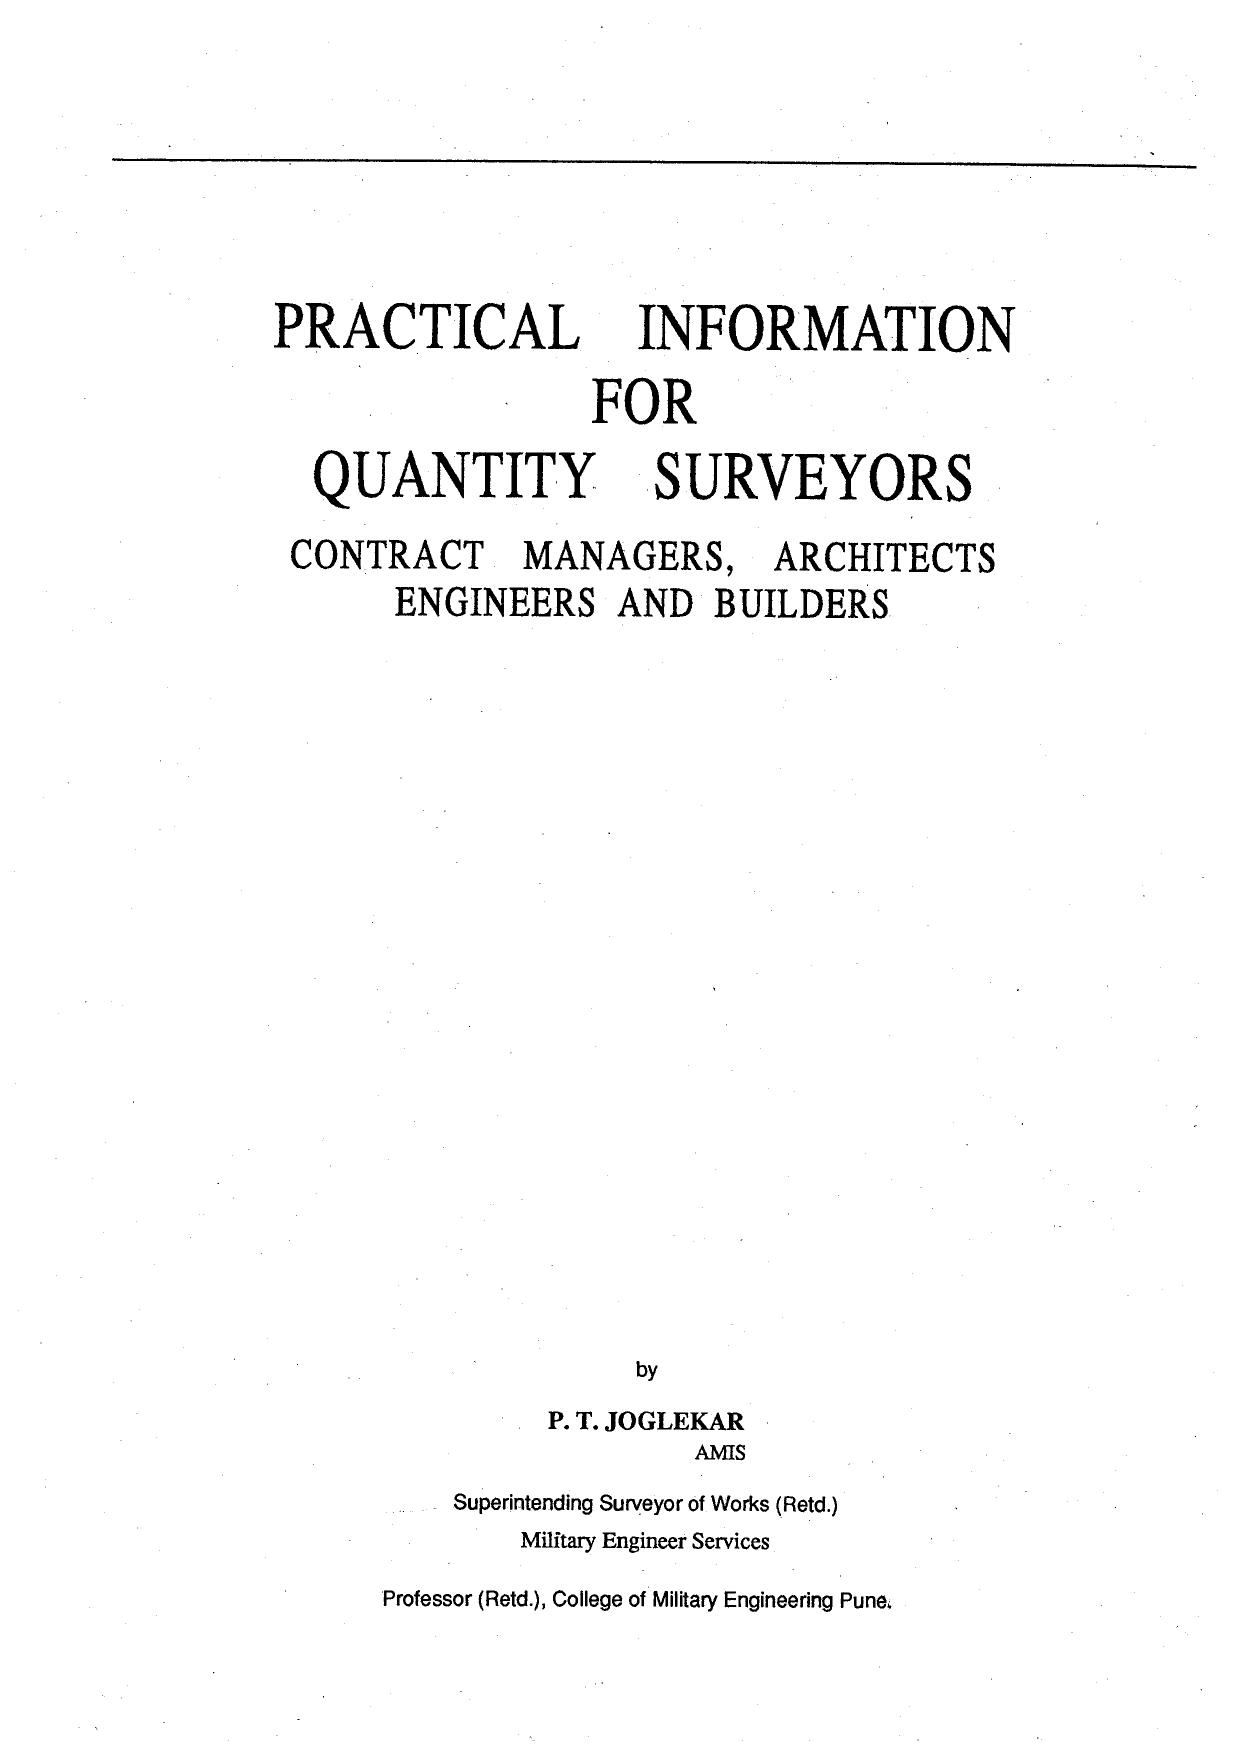 Practical information for Quantity Surveyors 1990